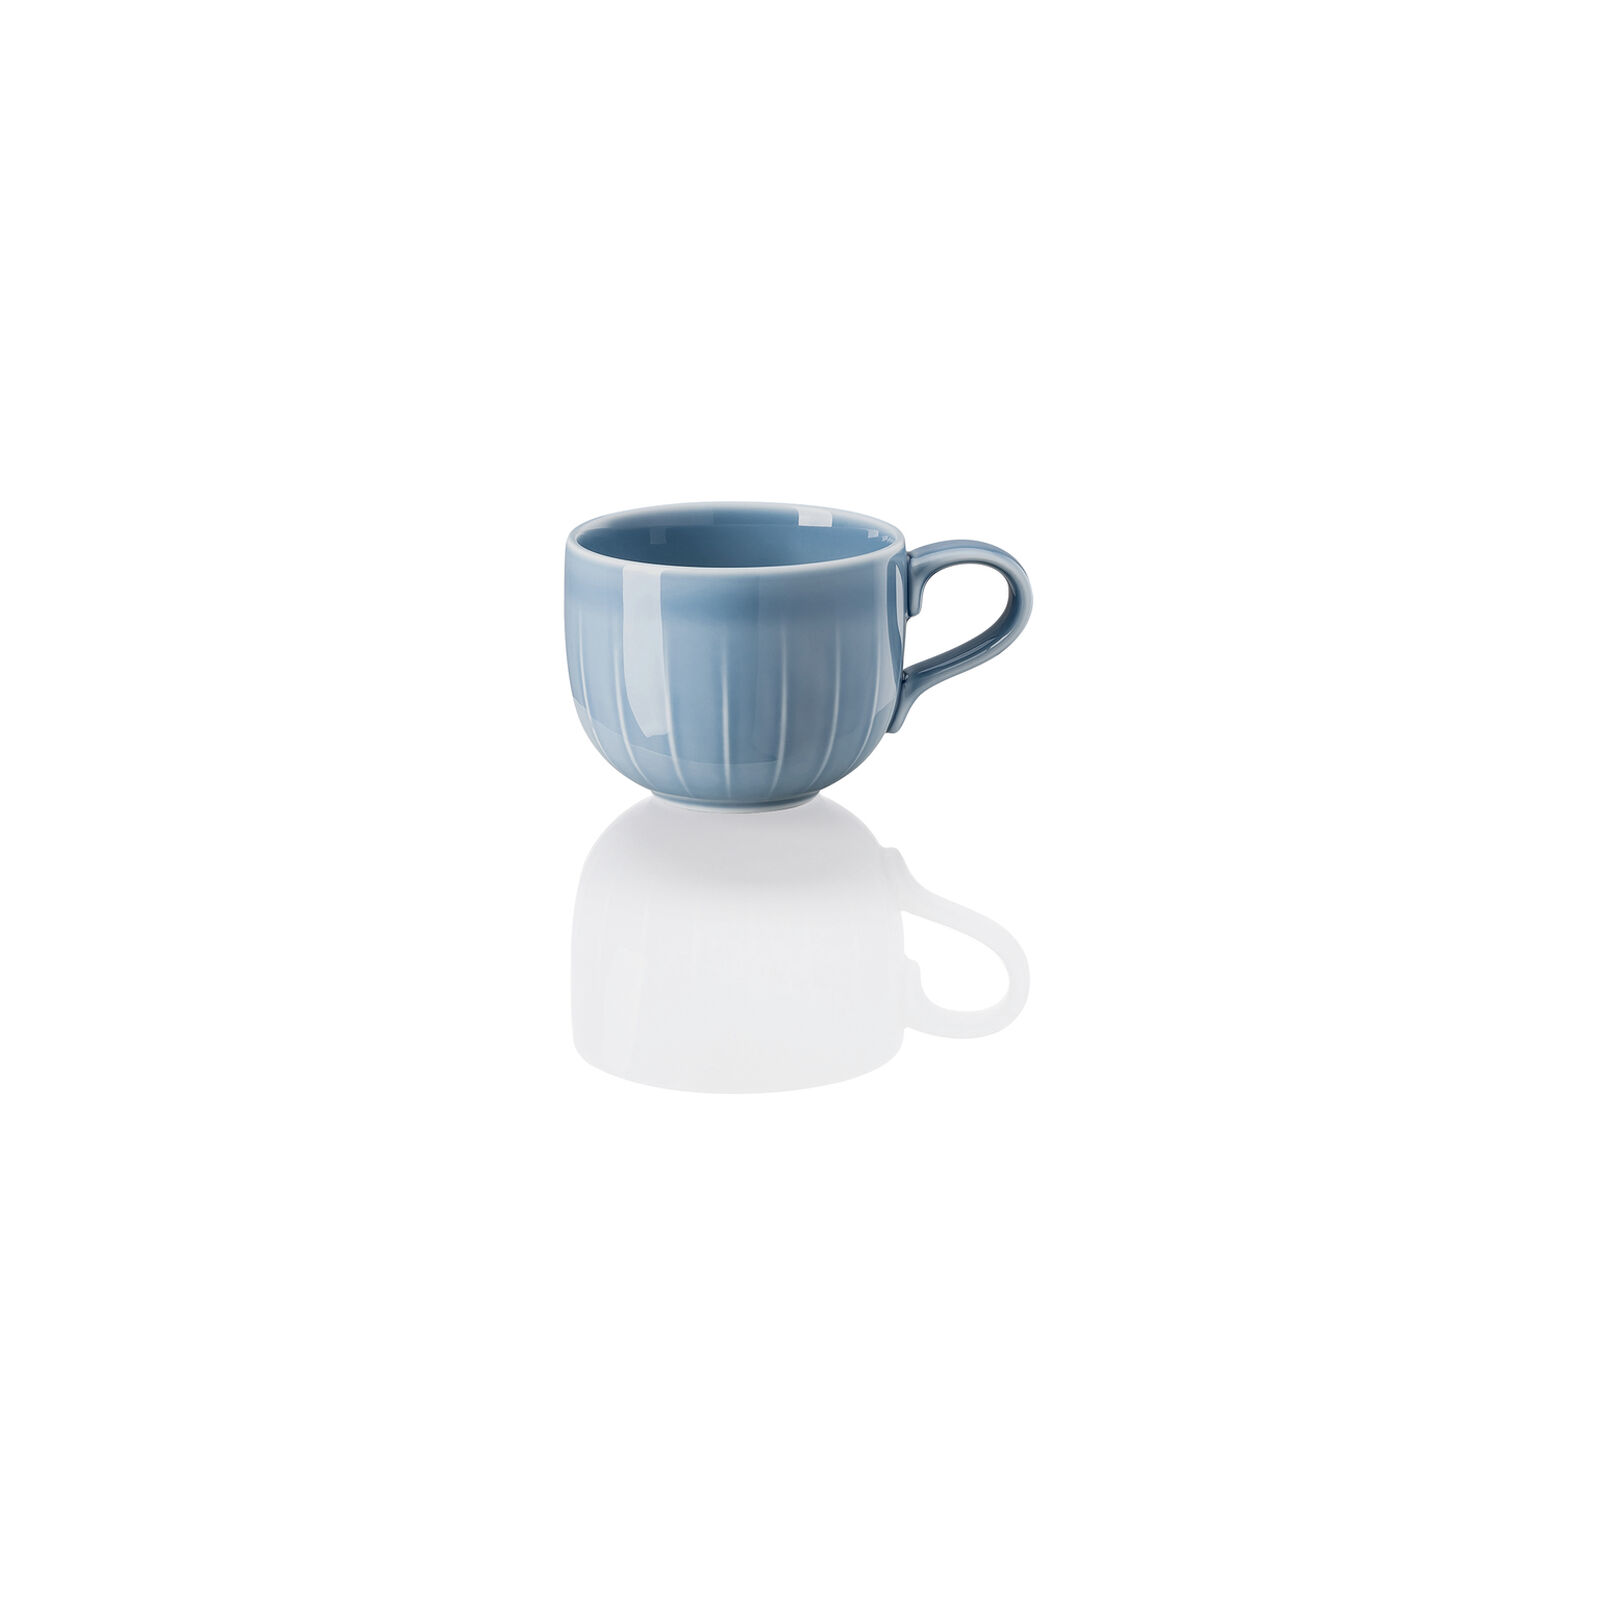 & Porcelain | Online Shop Mugs Cups Arzberg